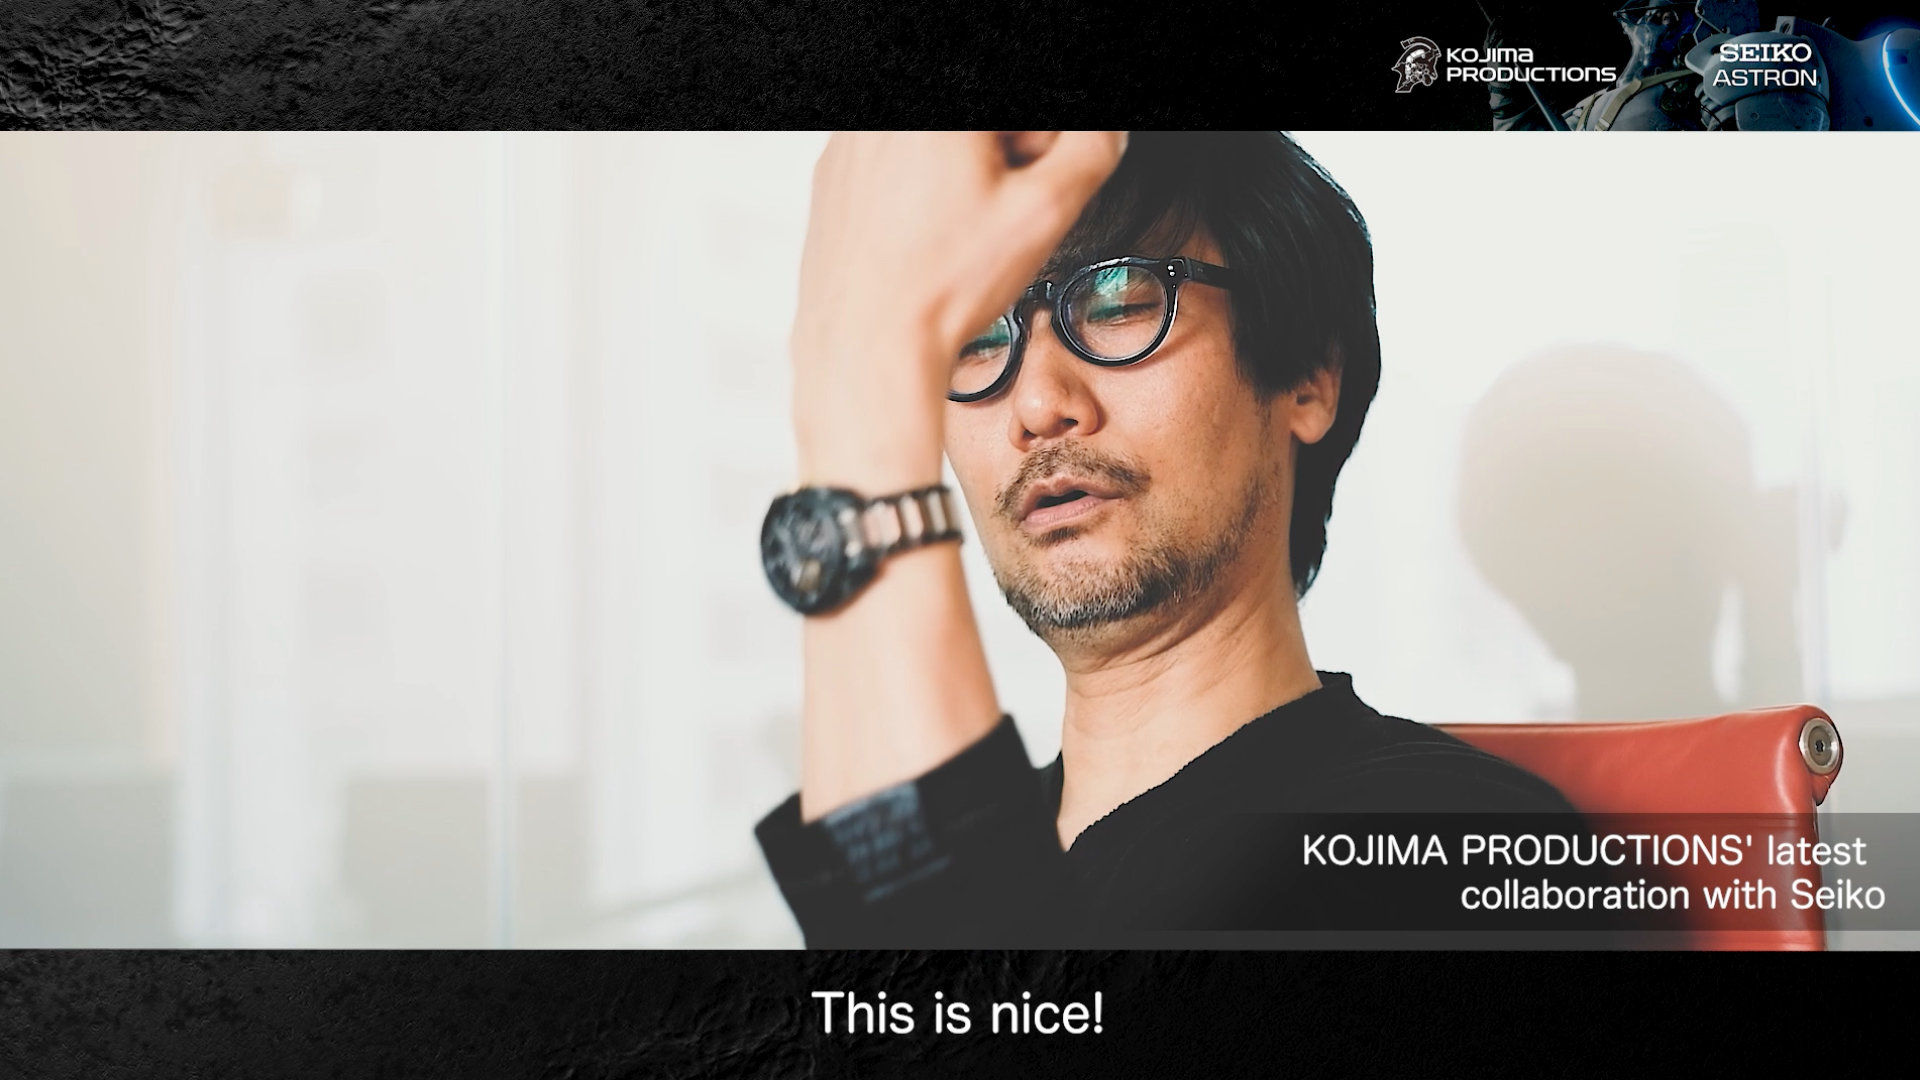 Hideo Kojima unboxing Seiko watch